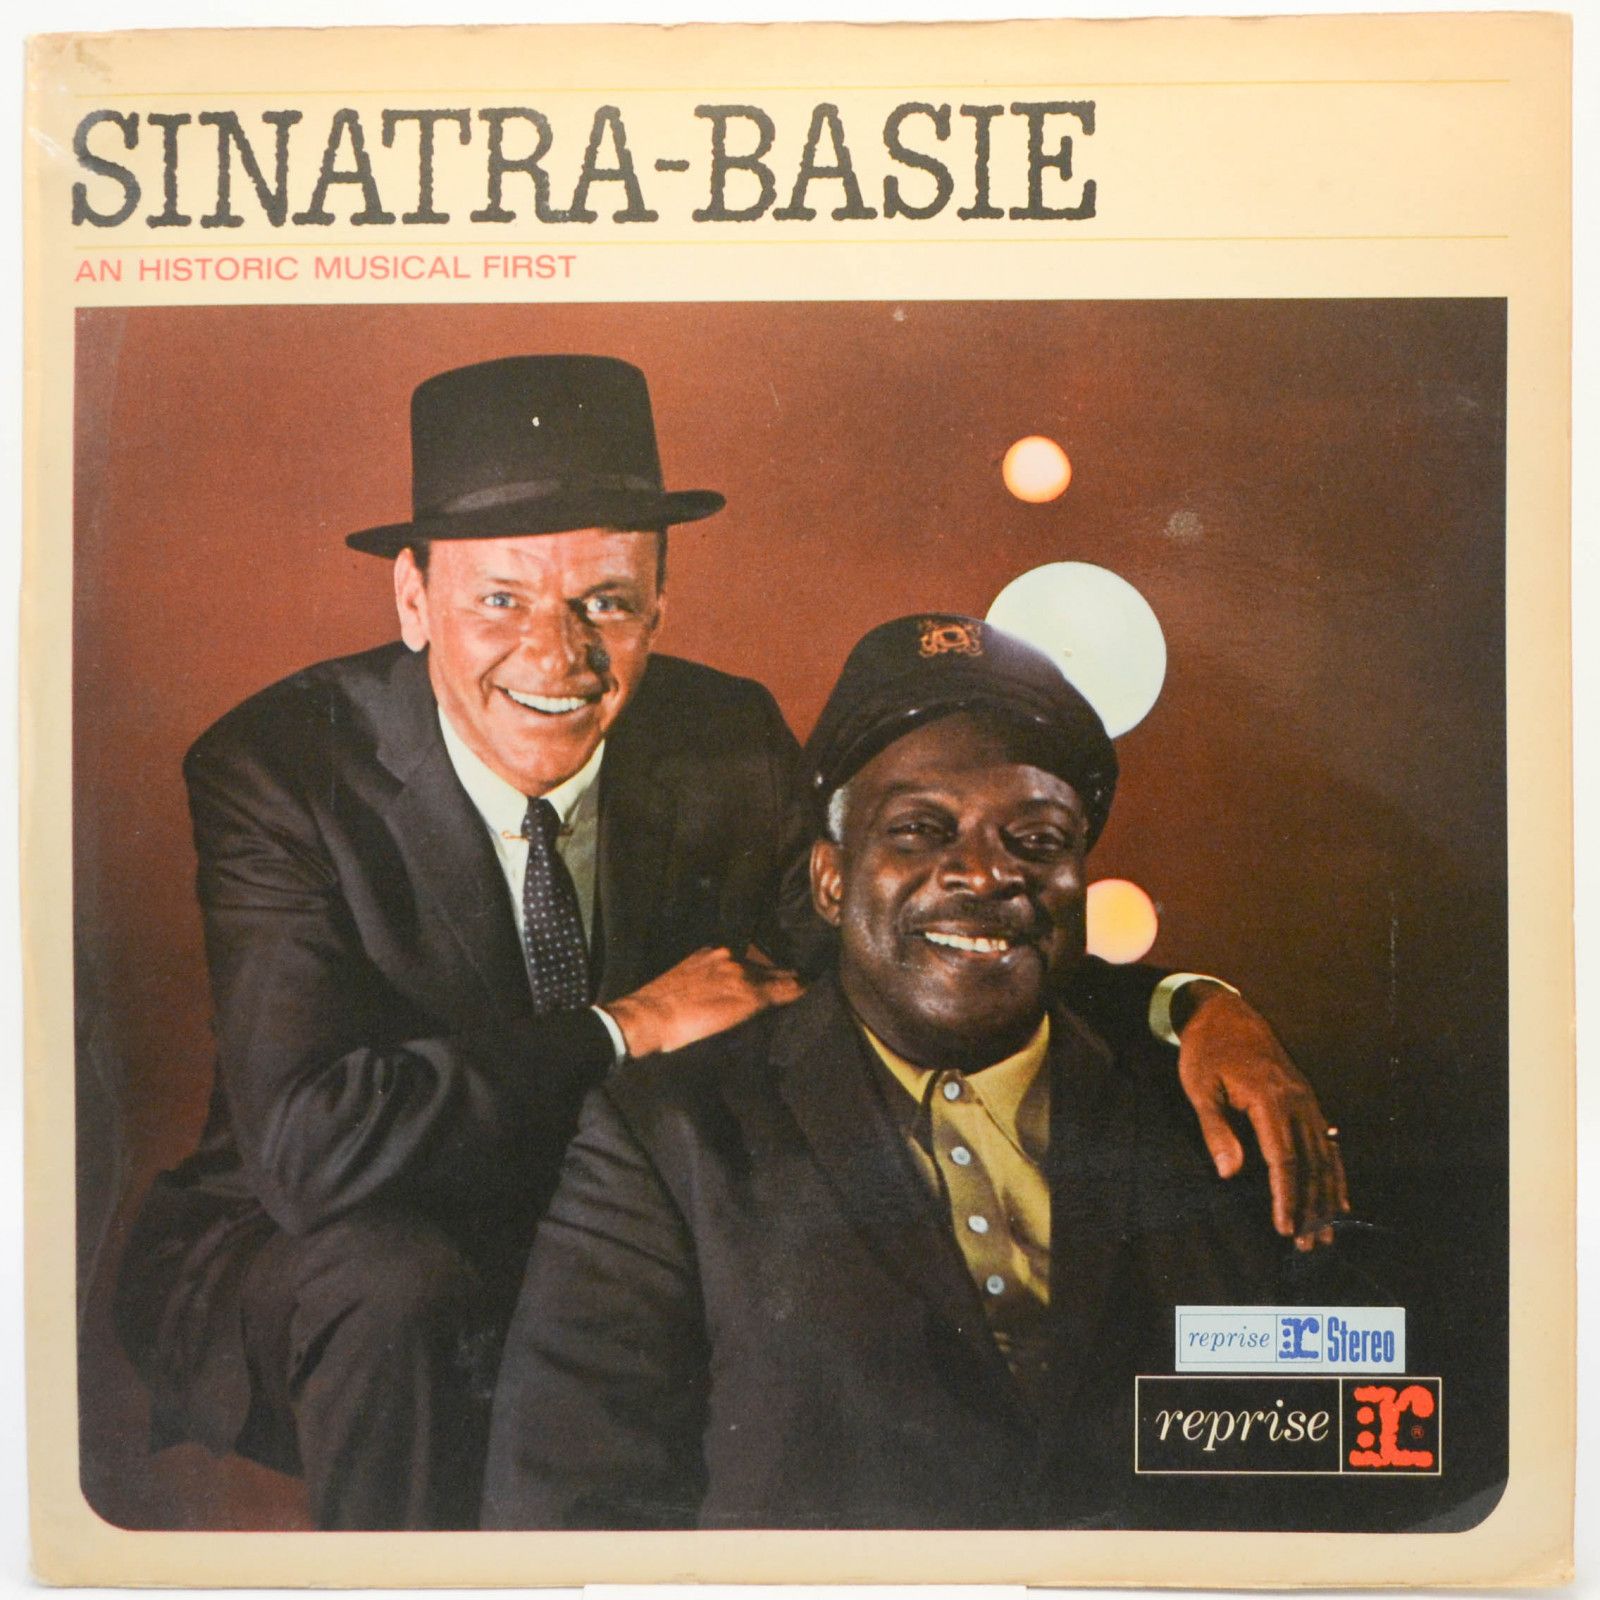 Sinatra - Basie — Sinatra-Basie (An Historic Musical First) (UK), 1962